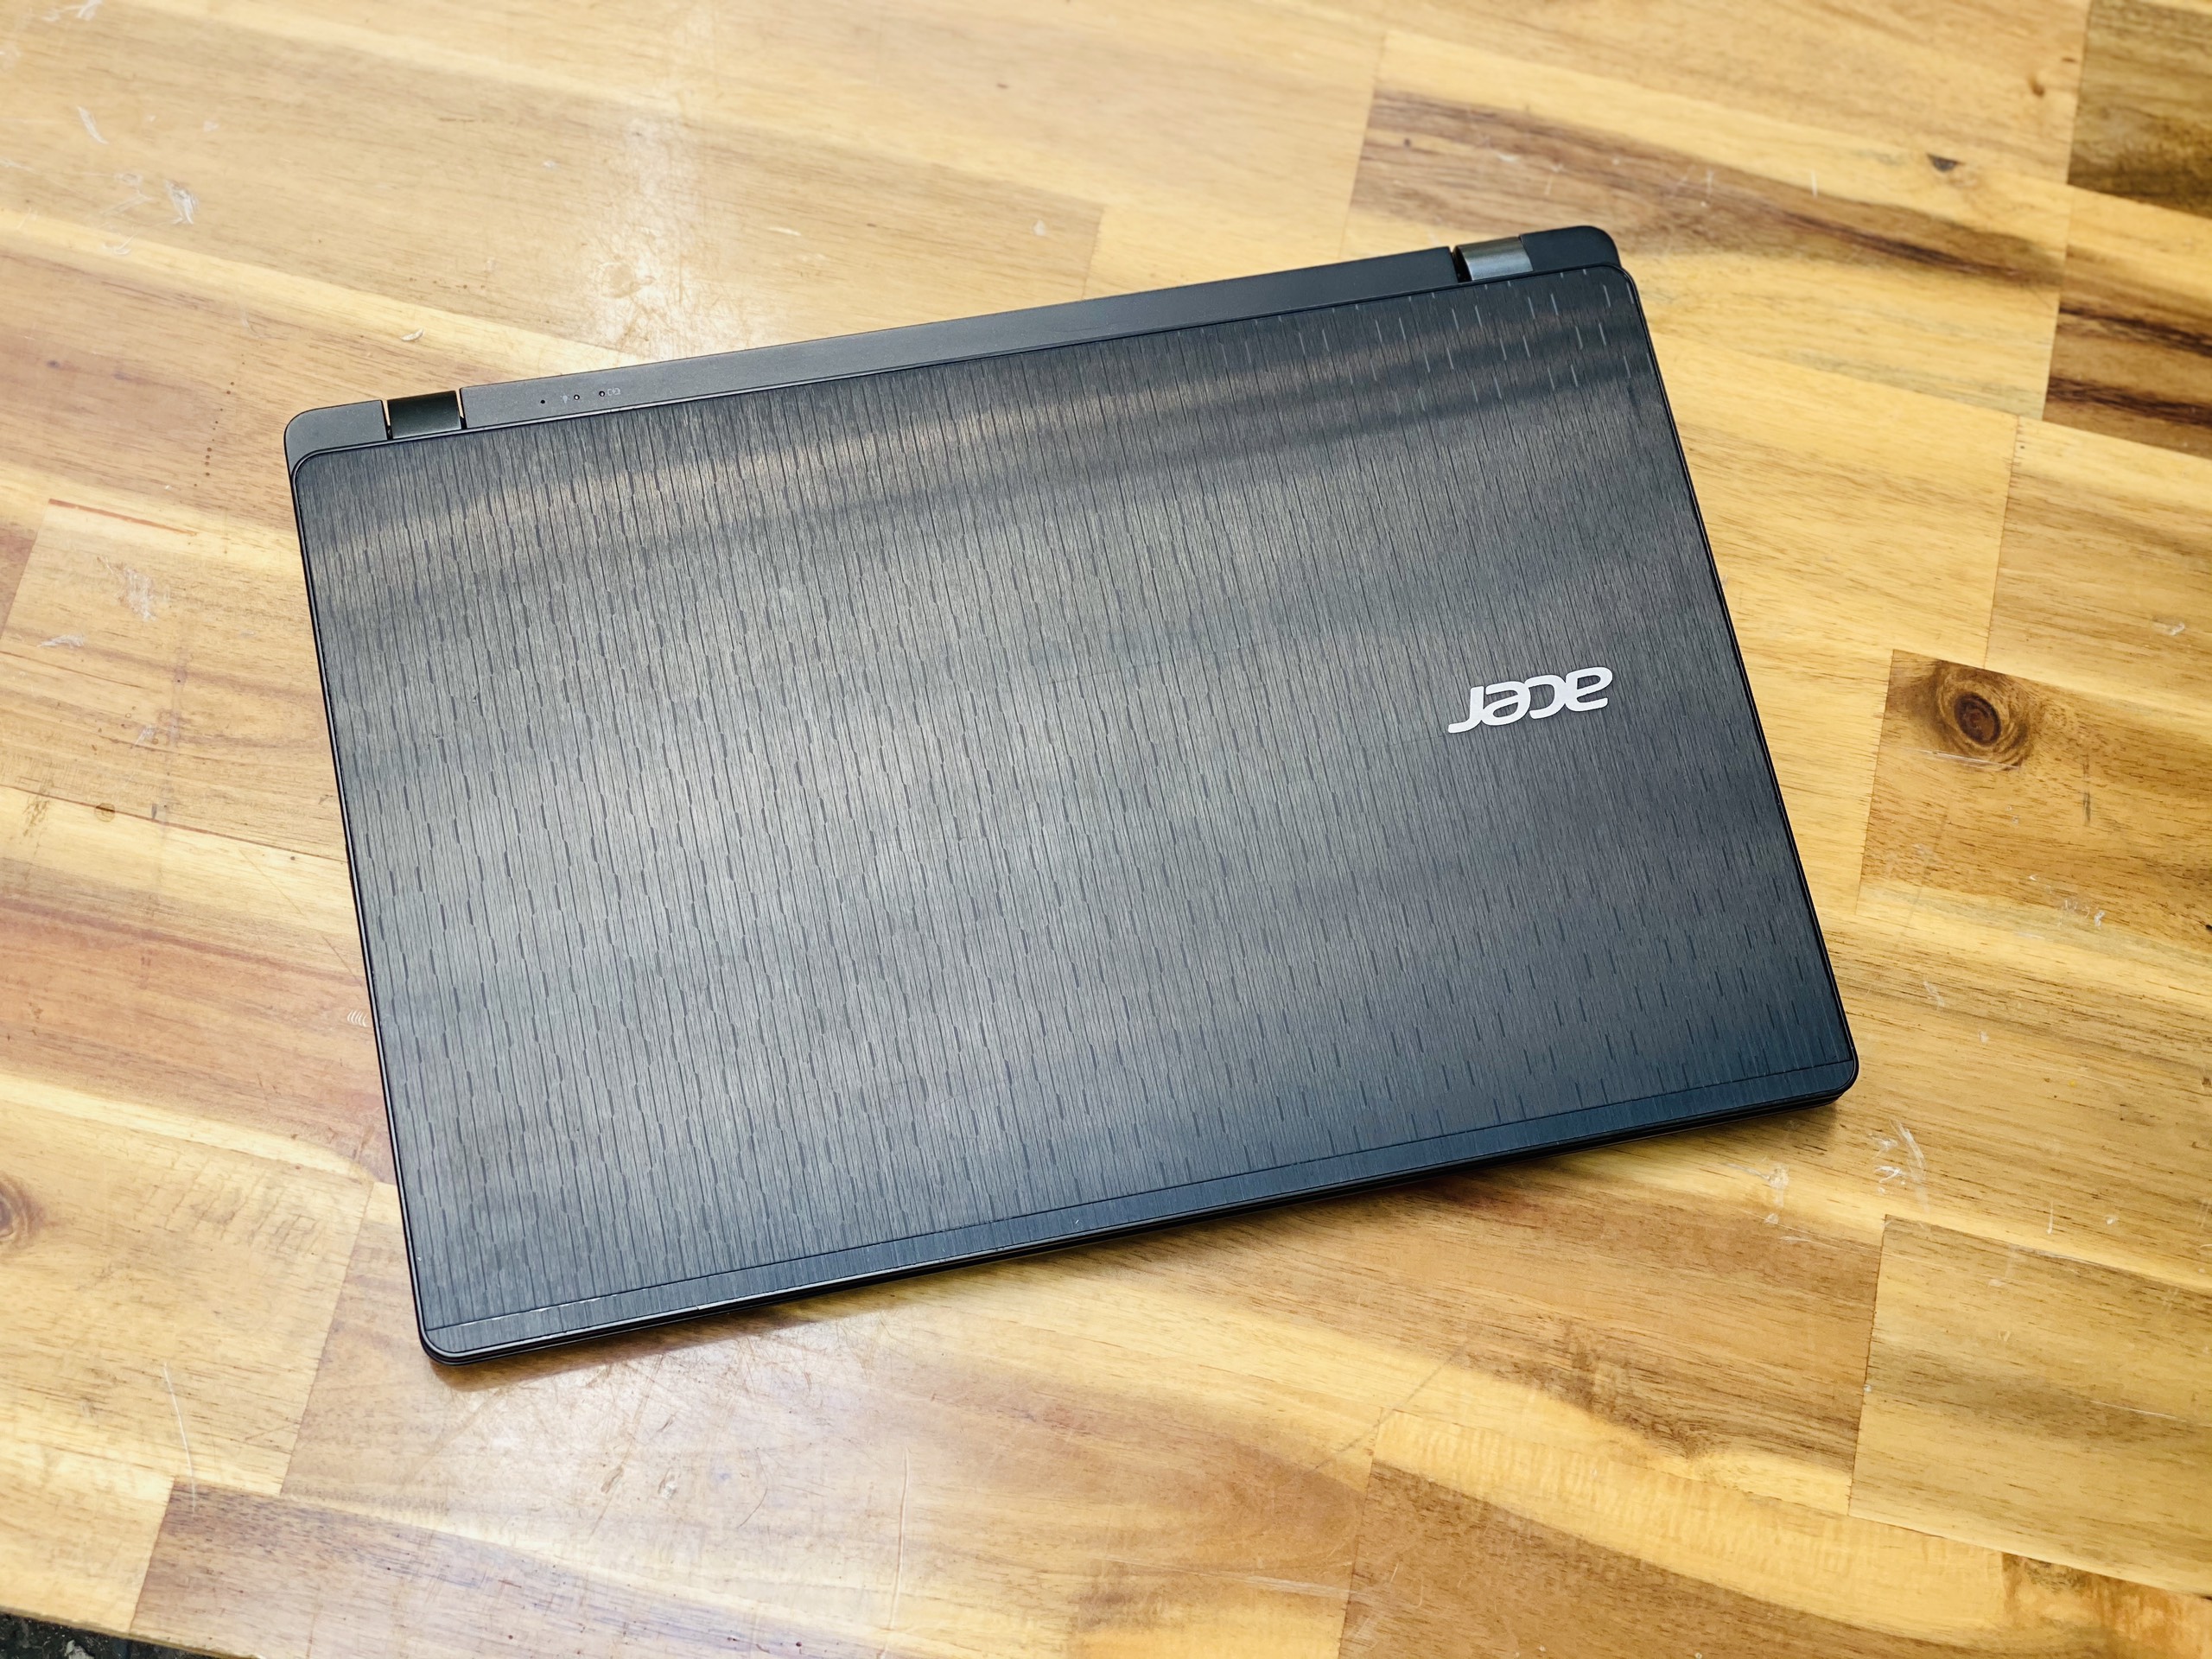 Laptop Acer Aspire V3-372/ i5 6200U/ 8G/ SSD/ Win 10/ 13in/ Giá rẻ1